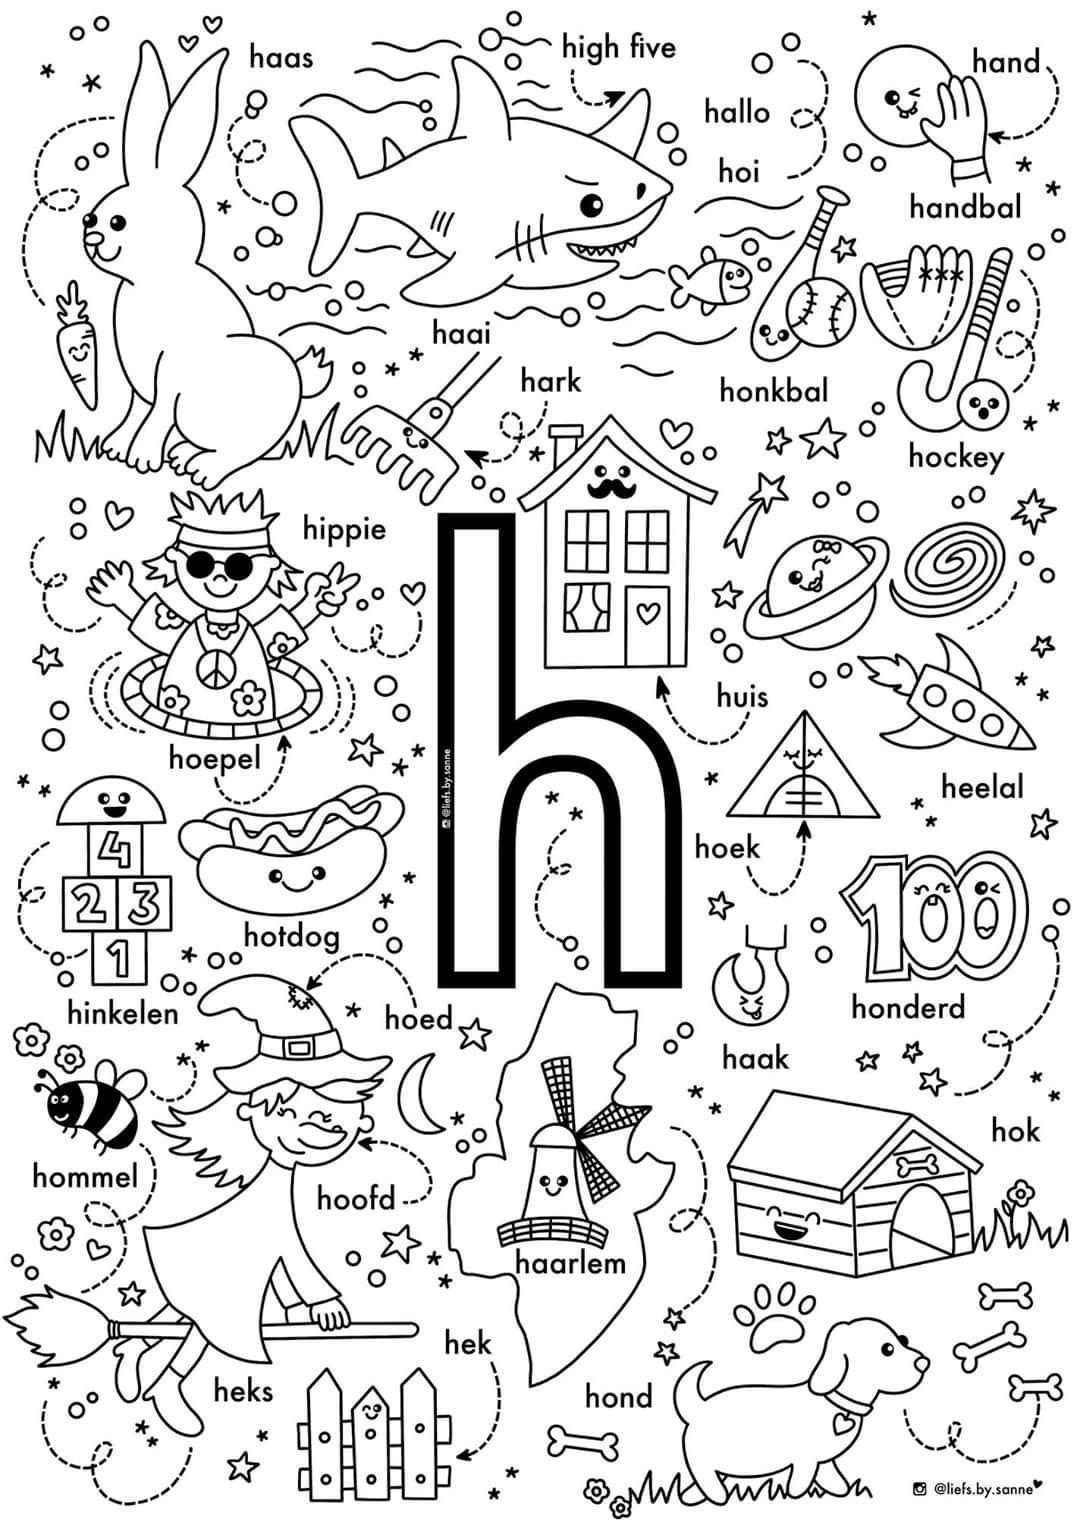 H Woorden Kleurplaat In 2020 Letterherkenning Spelletjes Letterherkenning Alfabet Kle